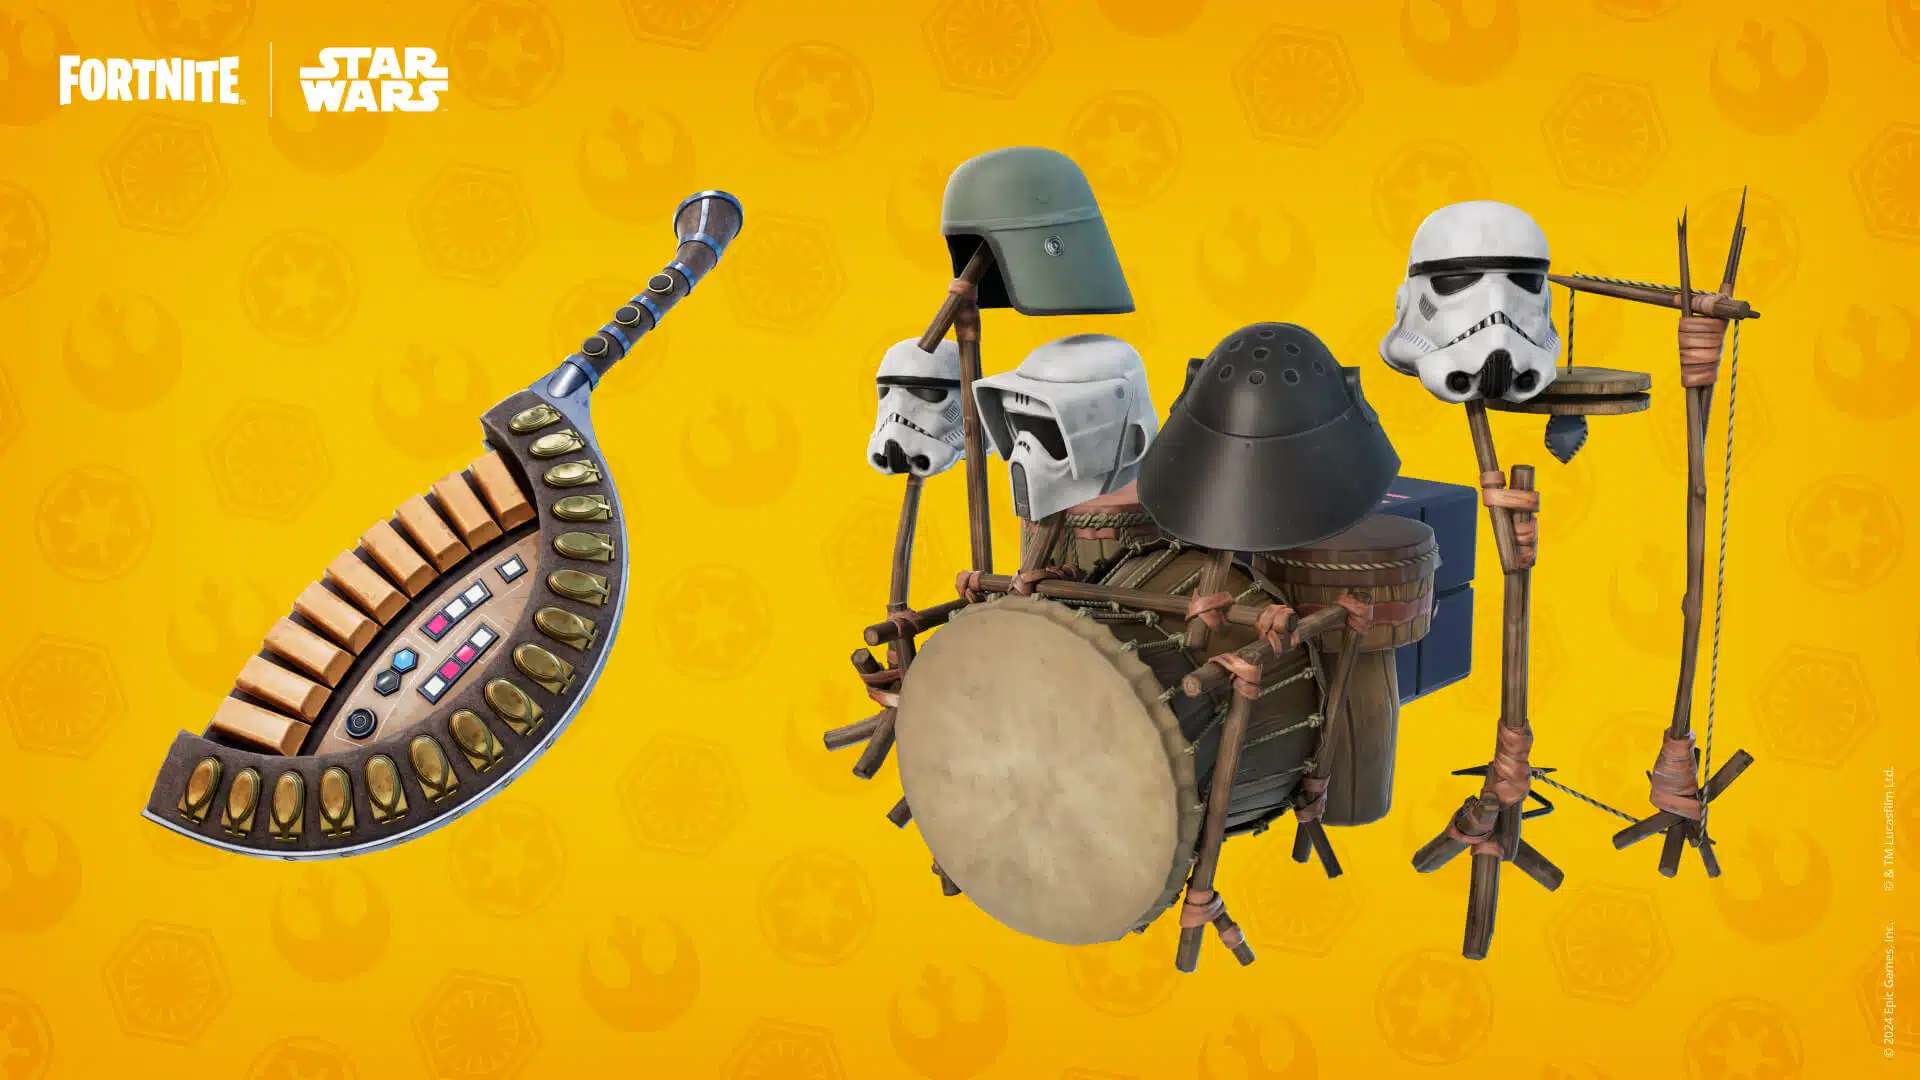 Fortnite Star Wars - Festival Instruments